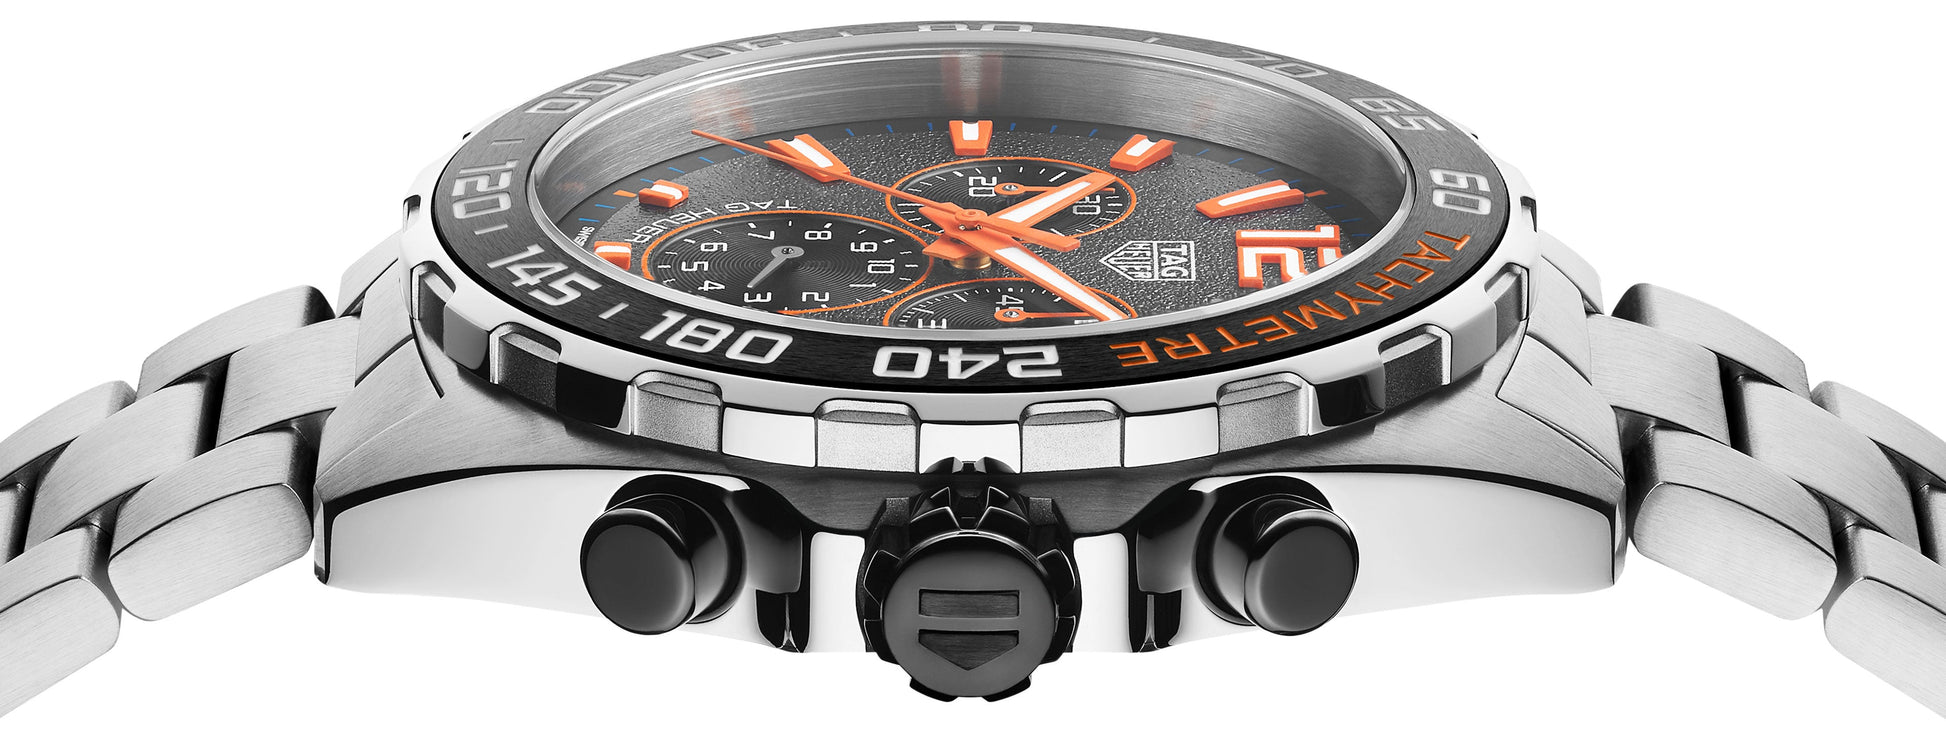 Tag Heuer Formula 1 Quartz Chronograph Grey Dial Silver Steel Strap Watch for Men - CAZ101AH.BA0842